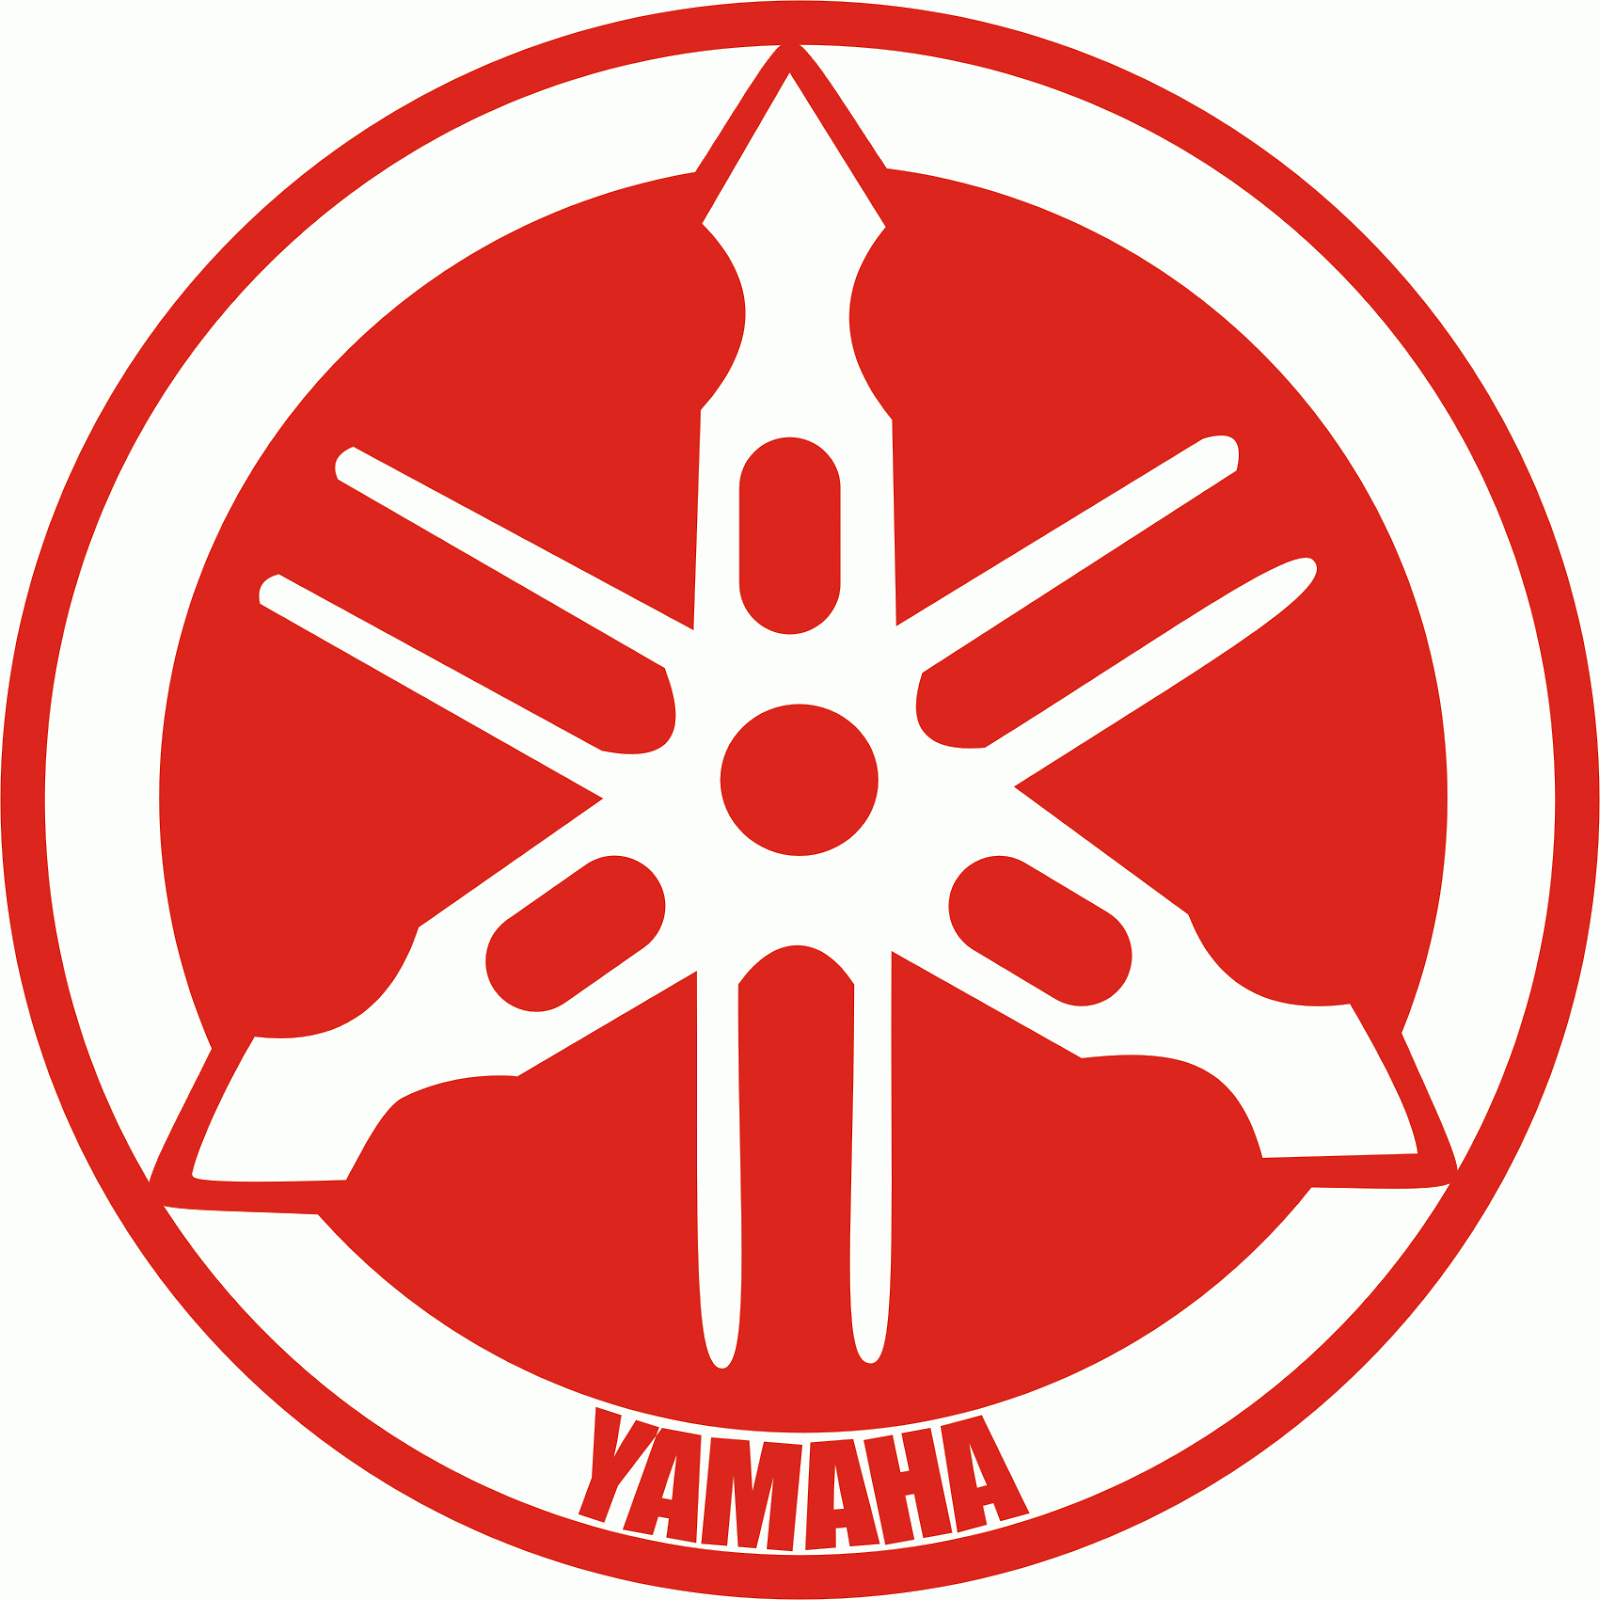 Yamaha Logo Wallpaper